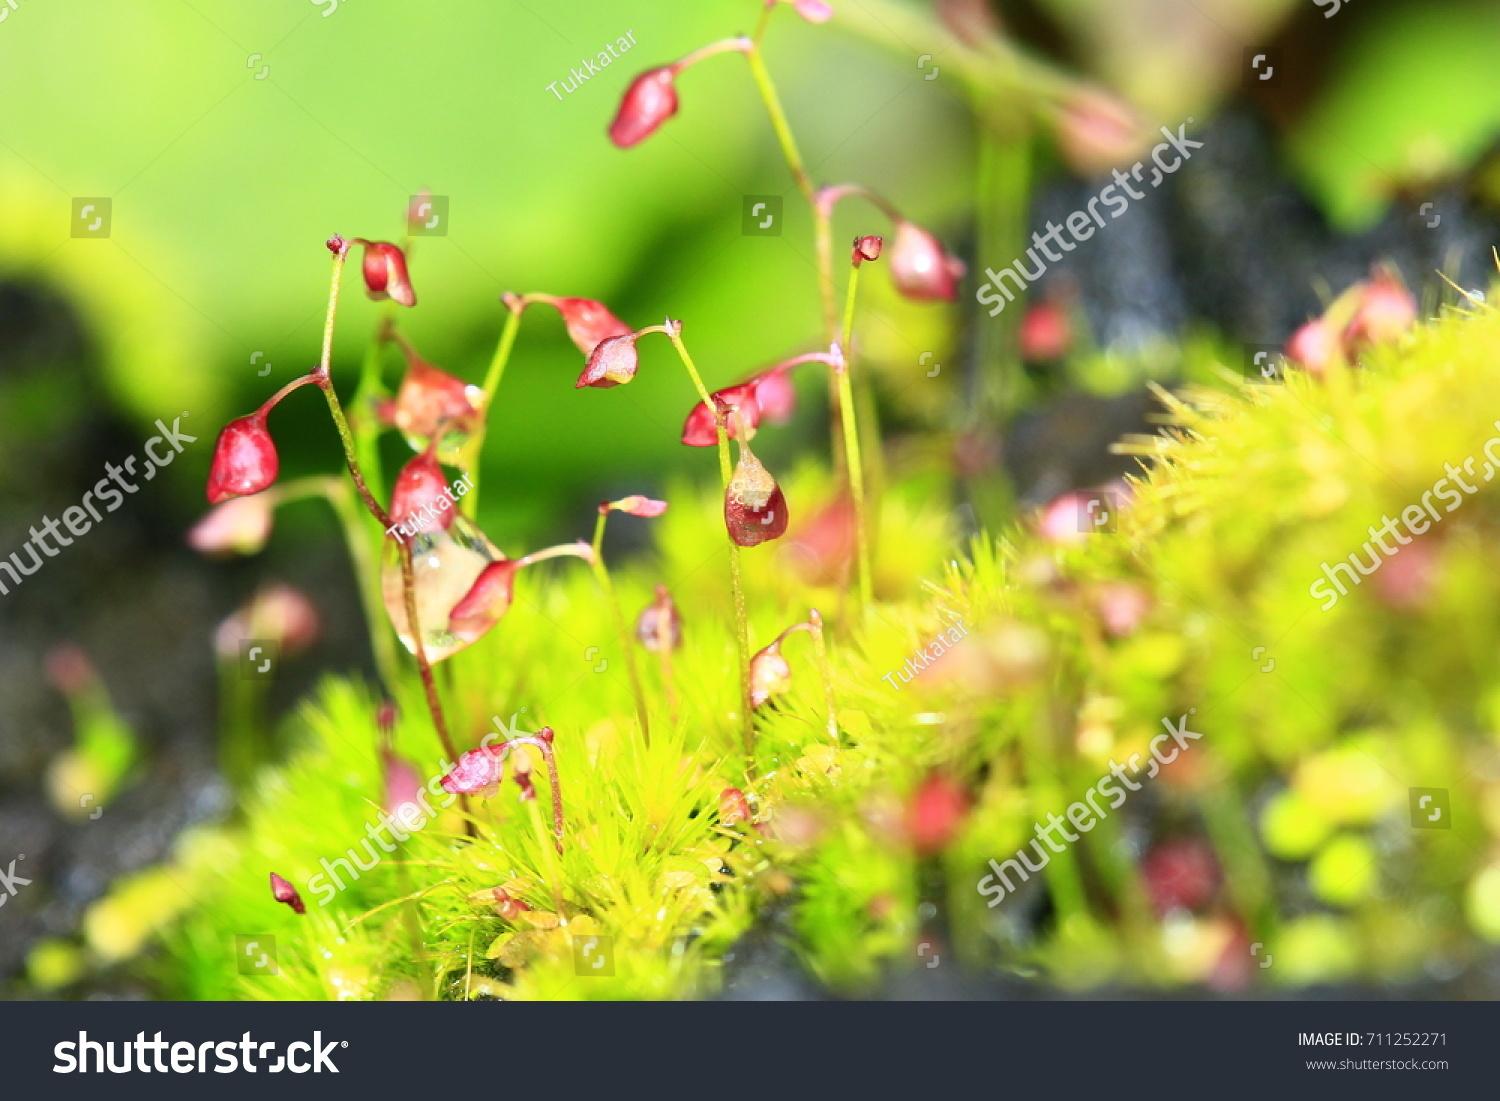 stock-photo--frame-moss-taxiphyllum-sp-rhodobryum-giganteum-in-the-nature-711252271.jpg